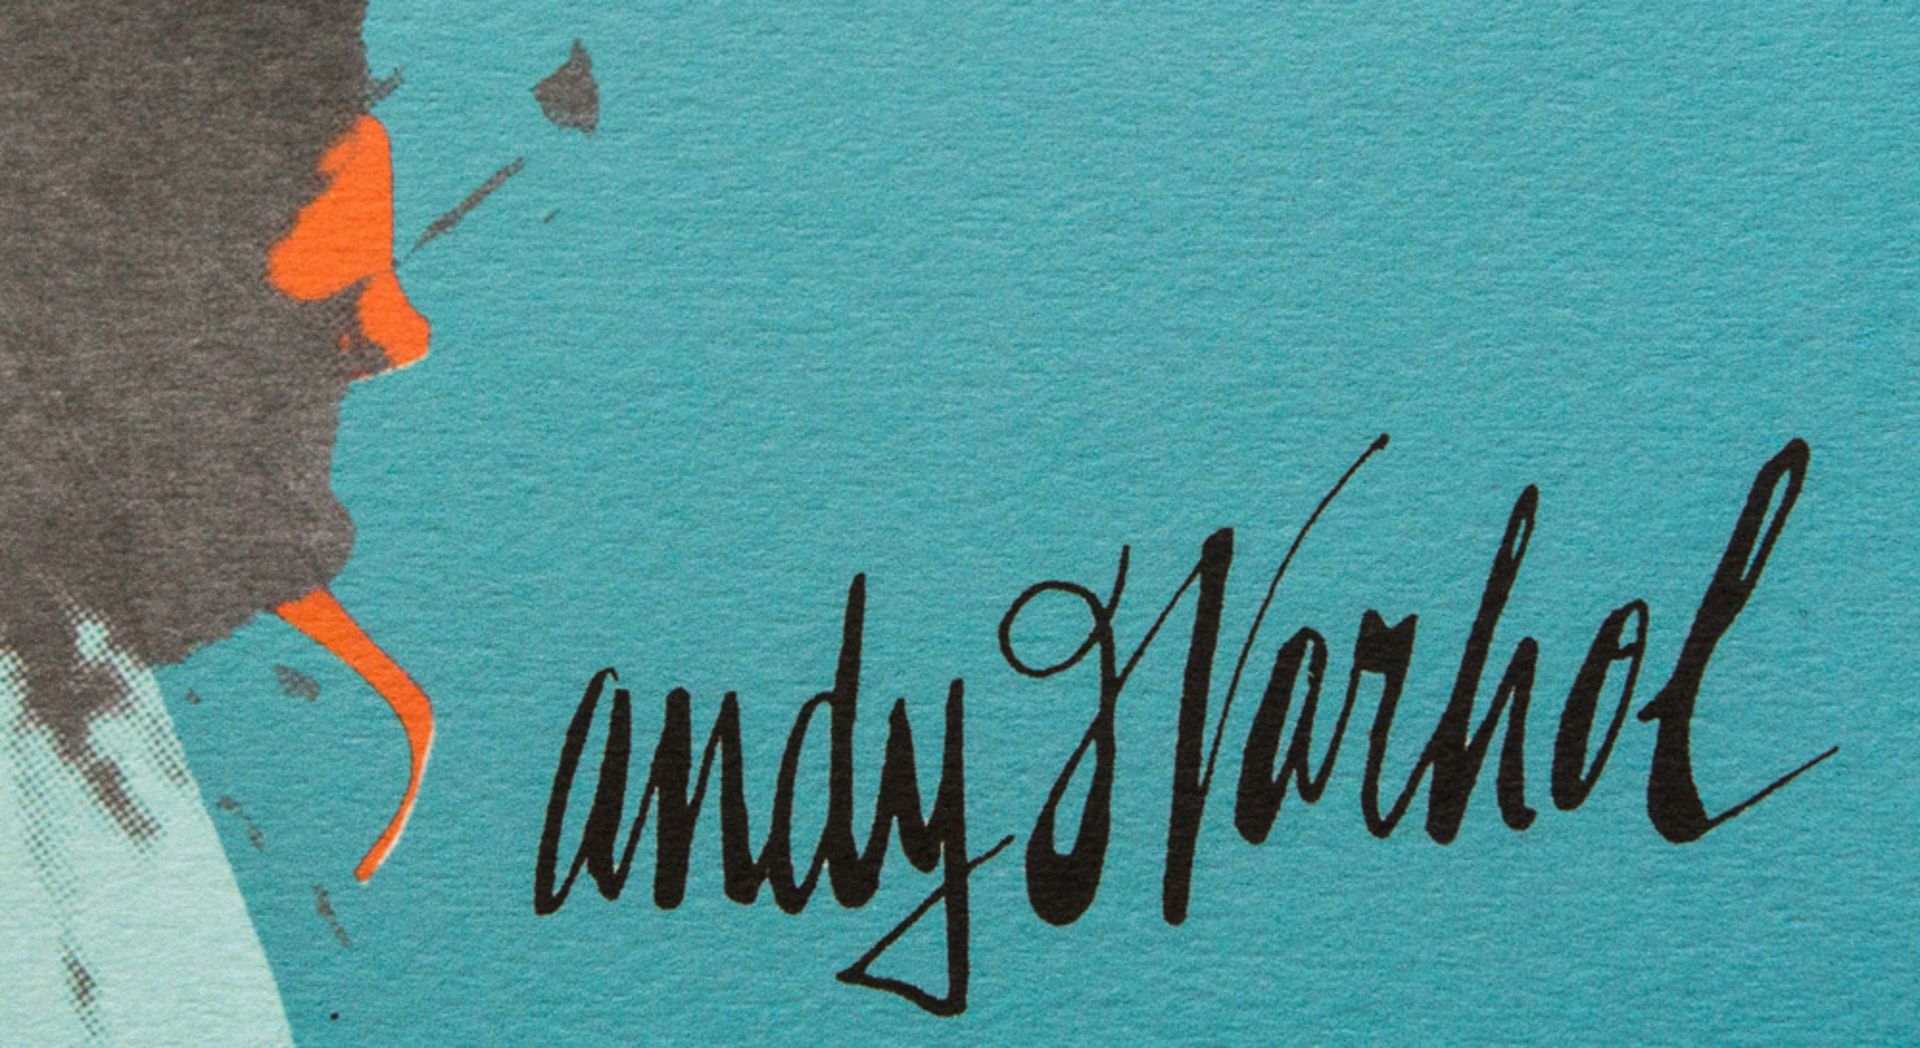 Andy Warhol 'Marilyn Monroe' - Bild 2 aus 4